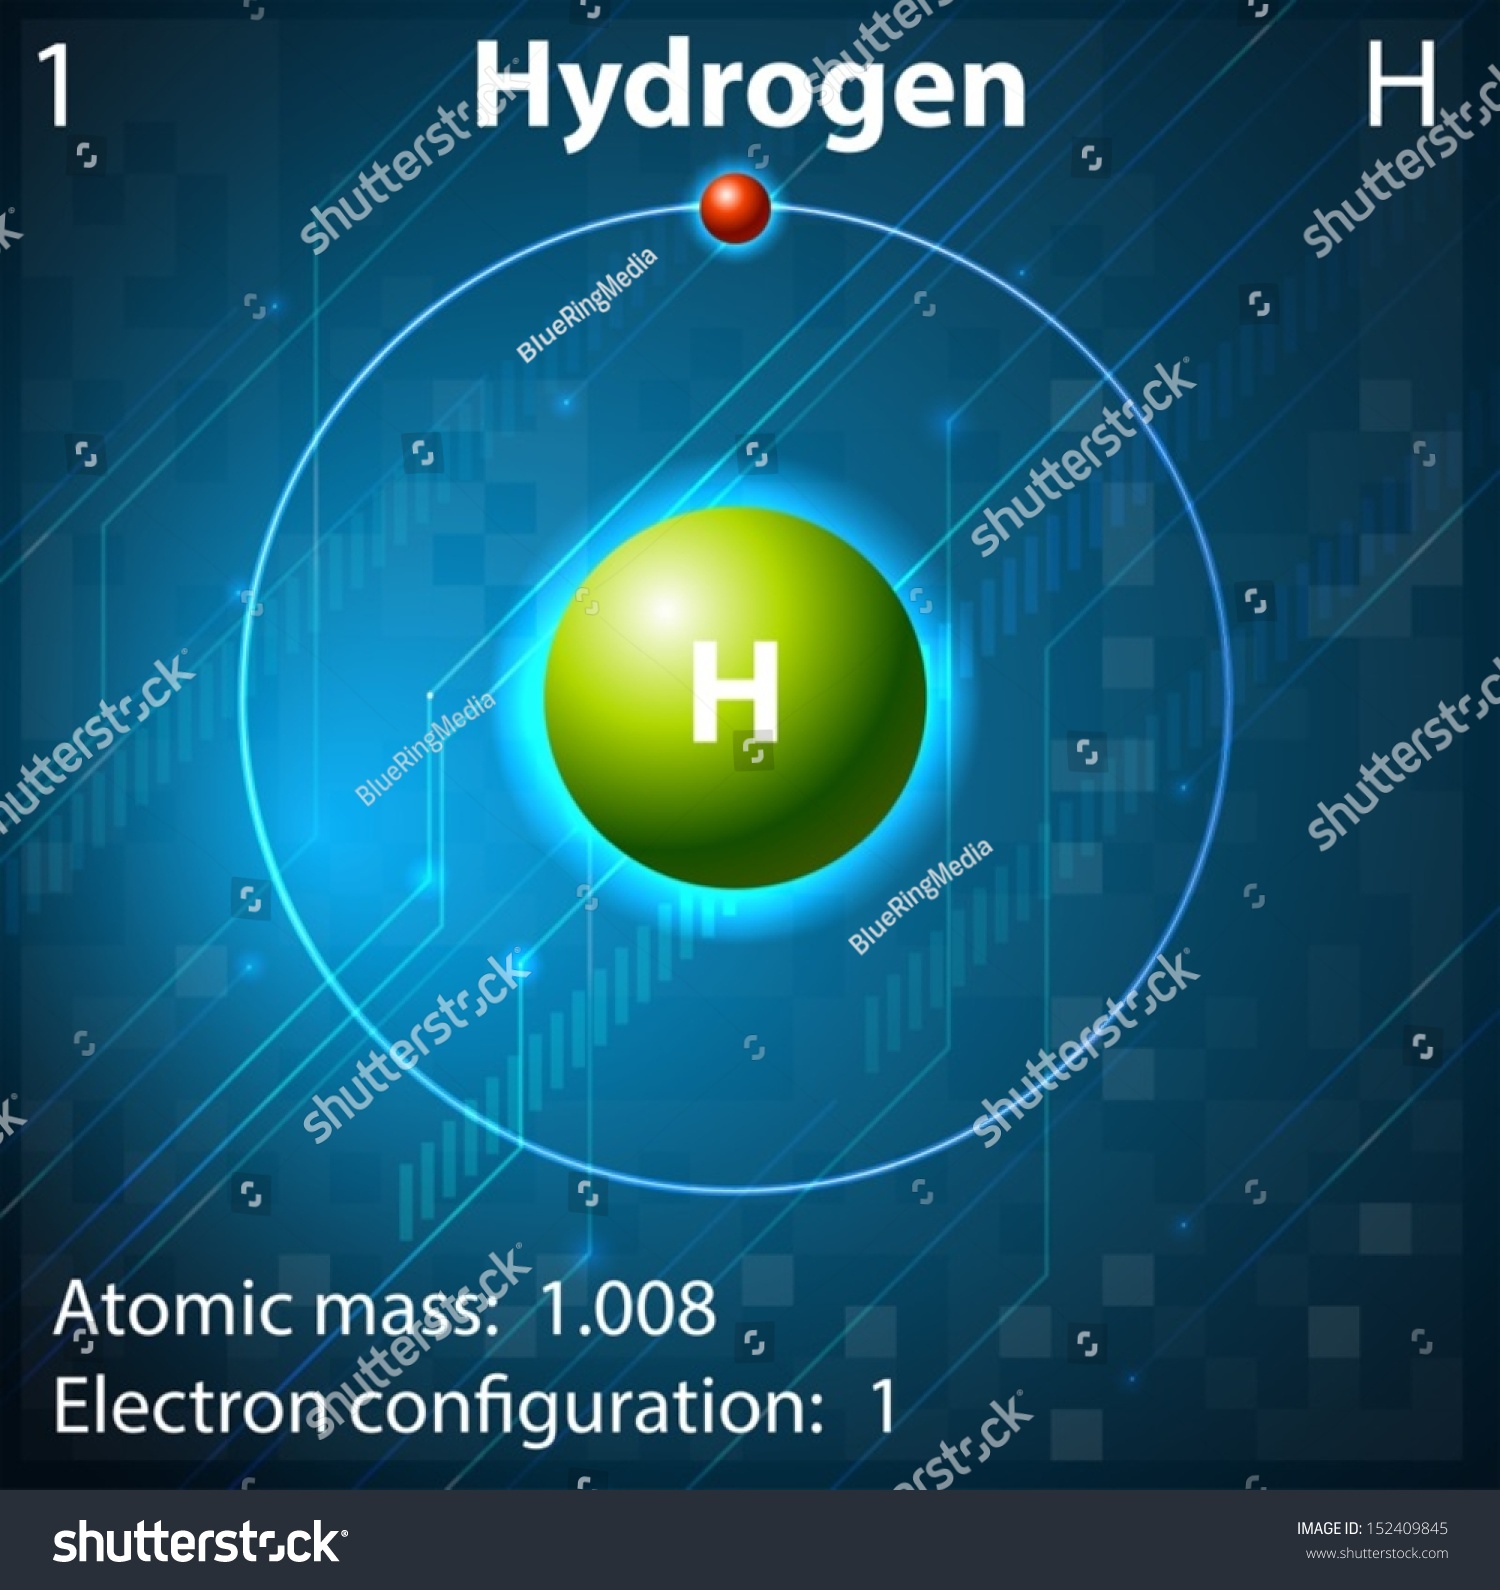 Illustration Element Hydrogen Stock Vector 152409845 - Shutterstock